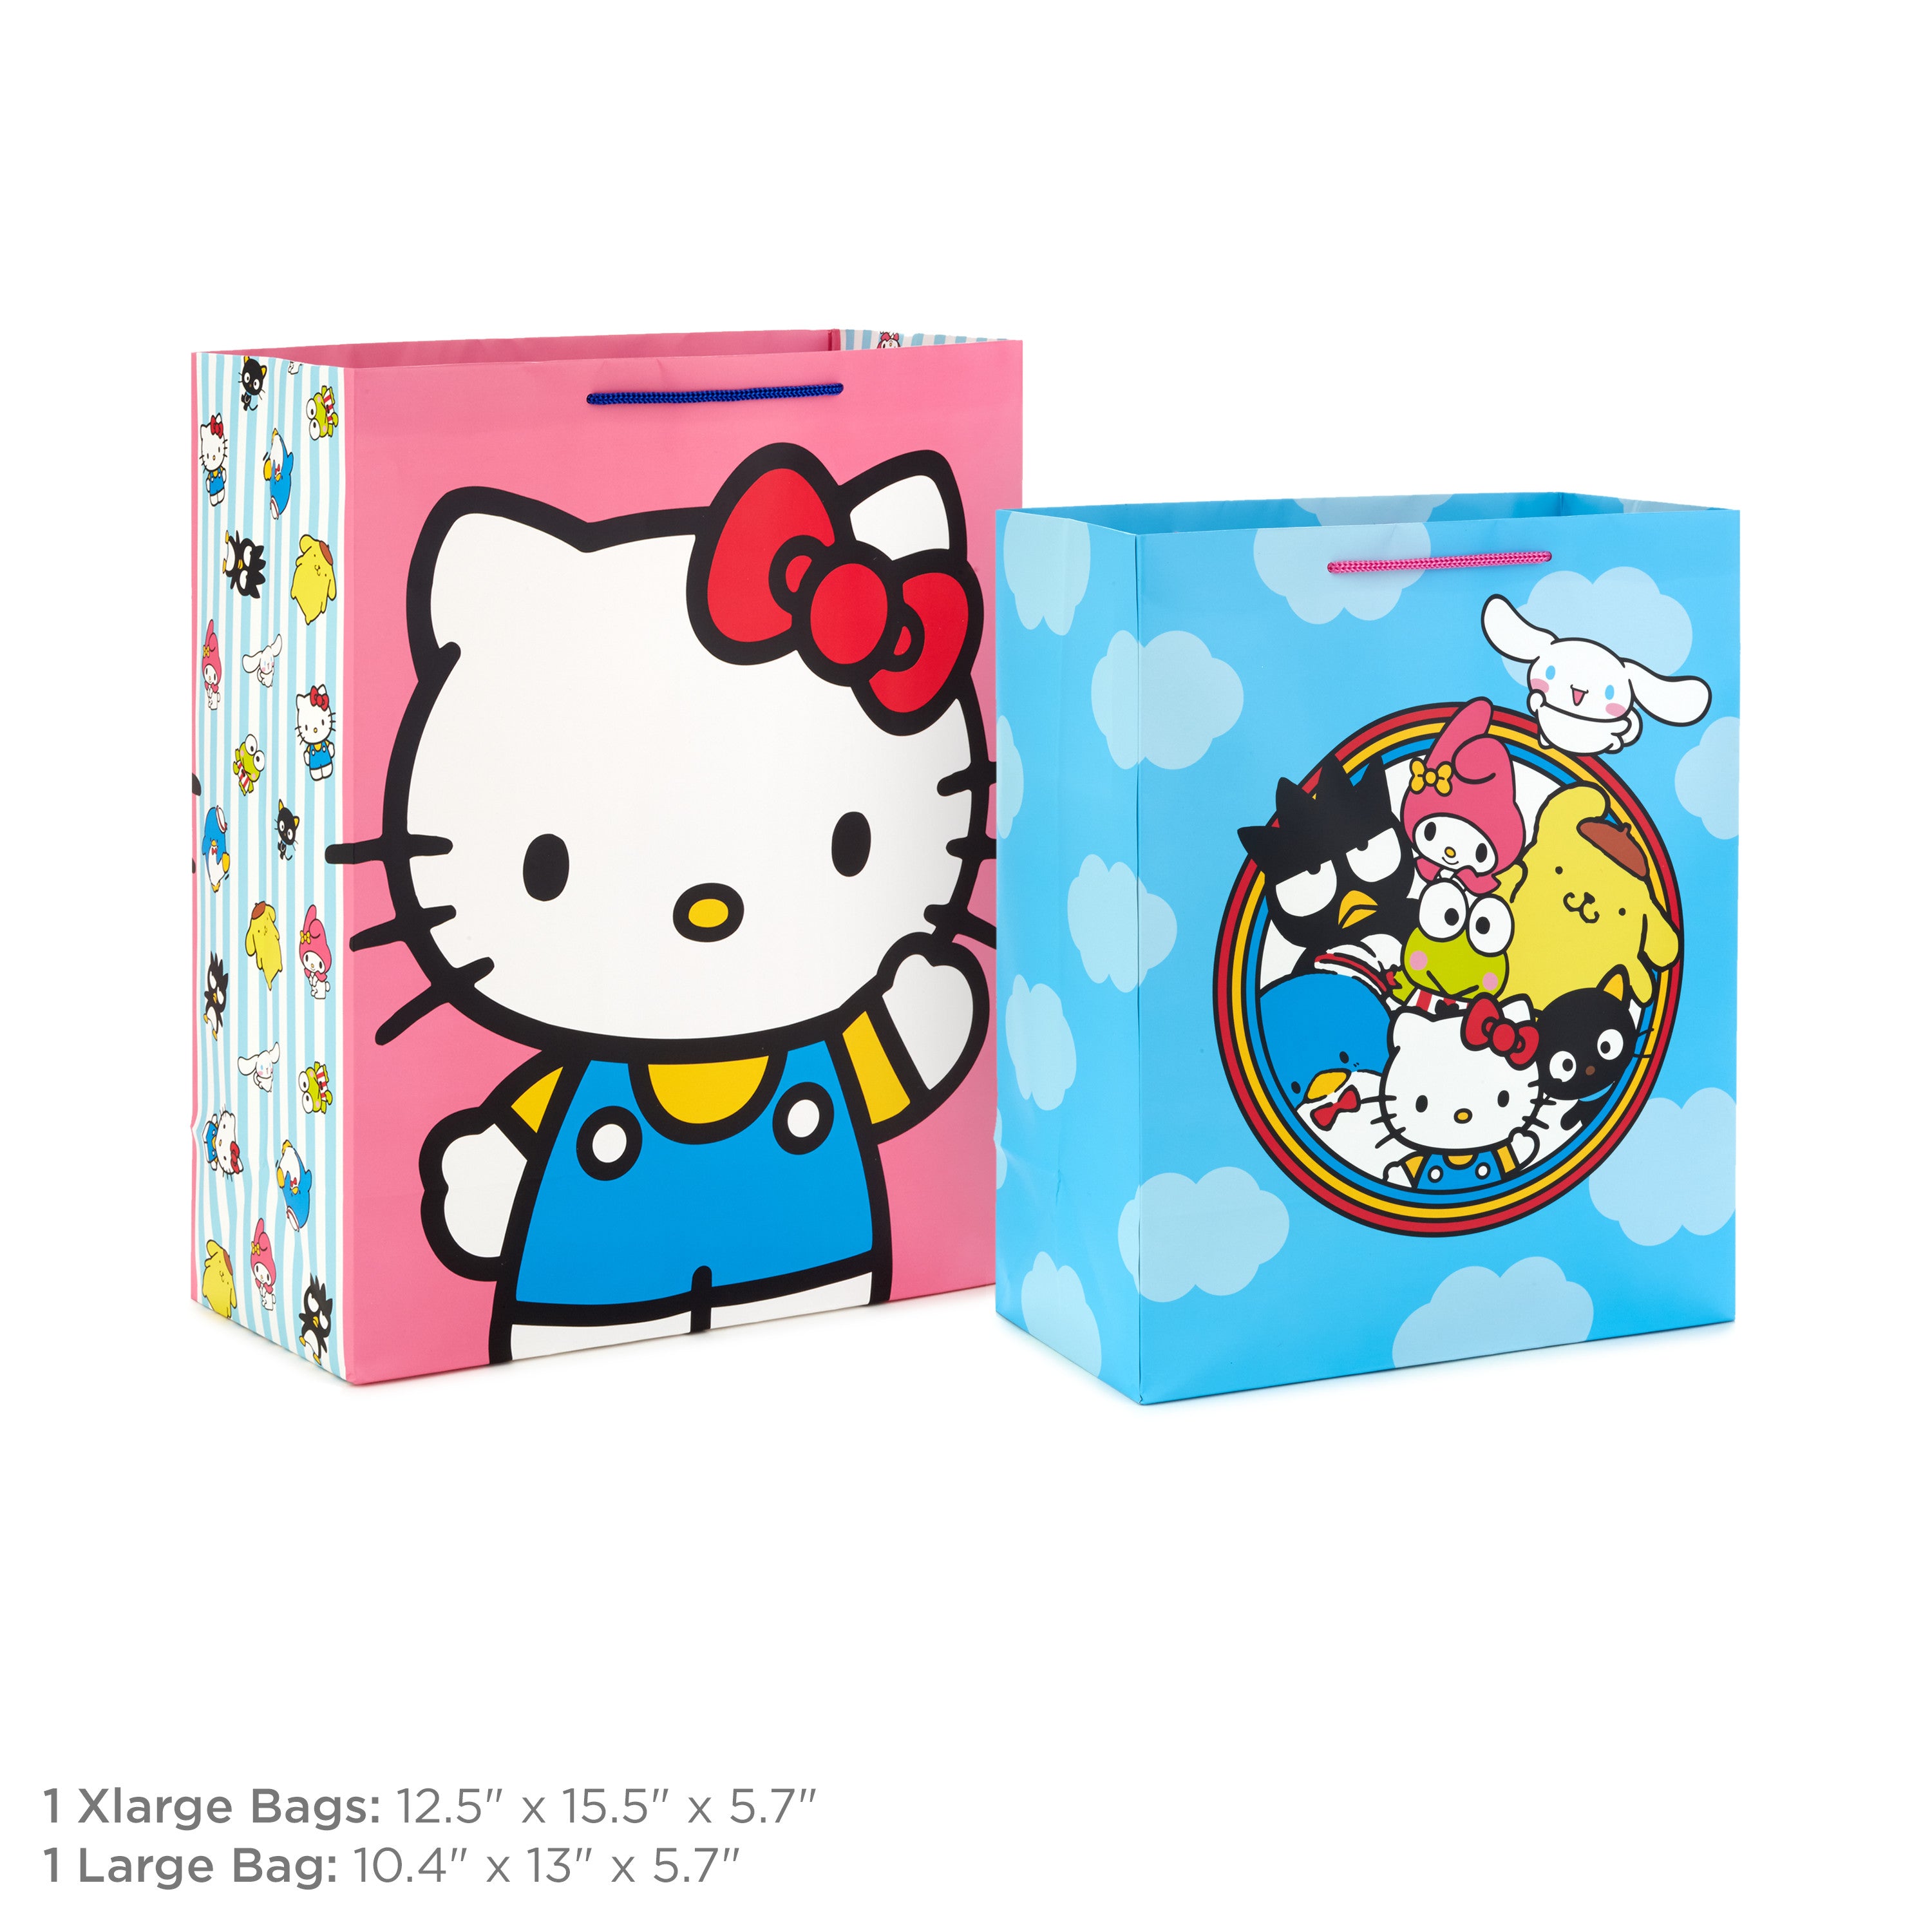 Hallmark Hello Kitty Gift Bag Bundle (2 Bags: 1 Large 13", 1 XL 15") for Birthdays, Back to School, Halloween